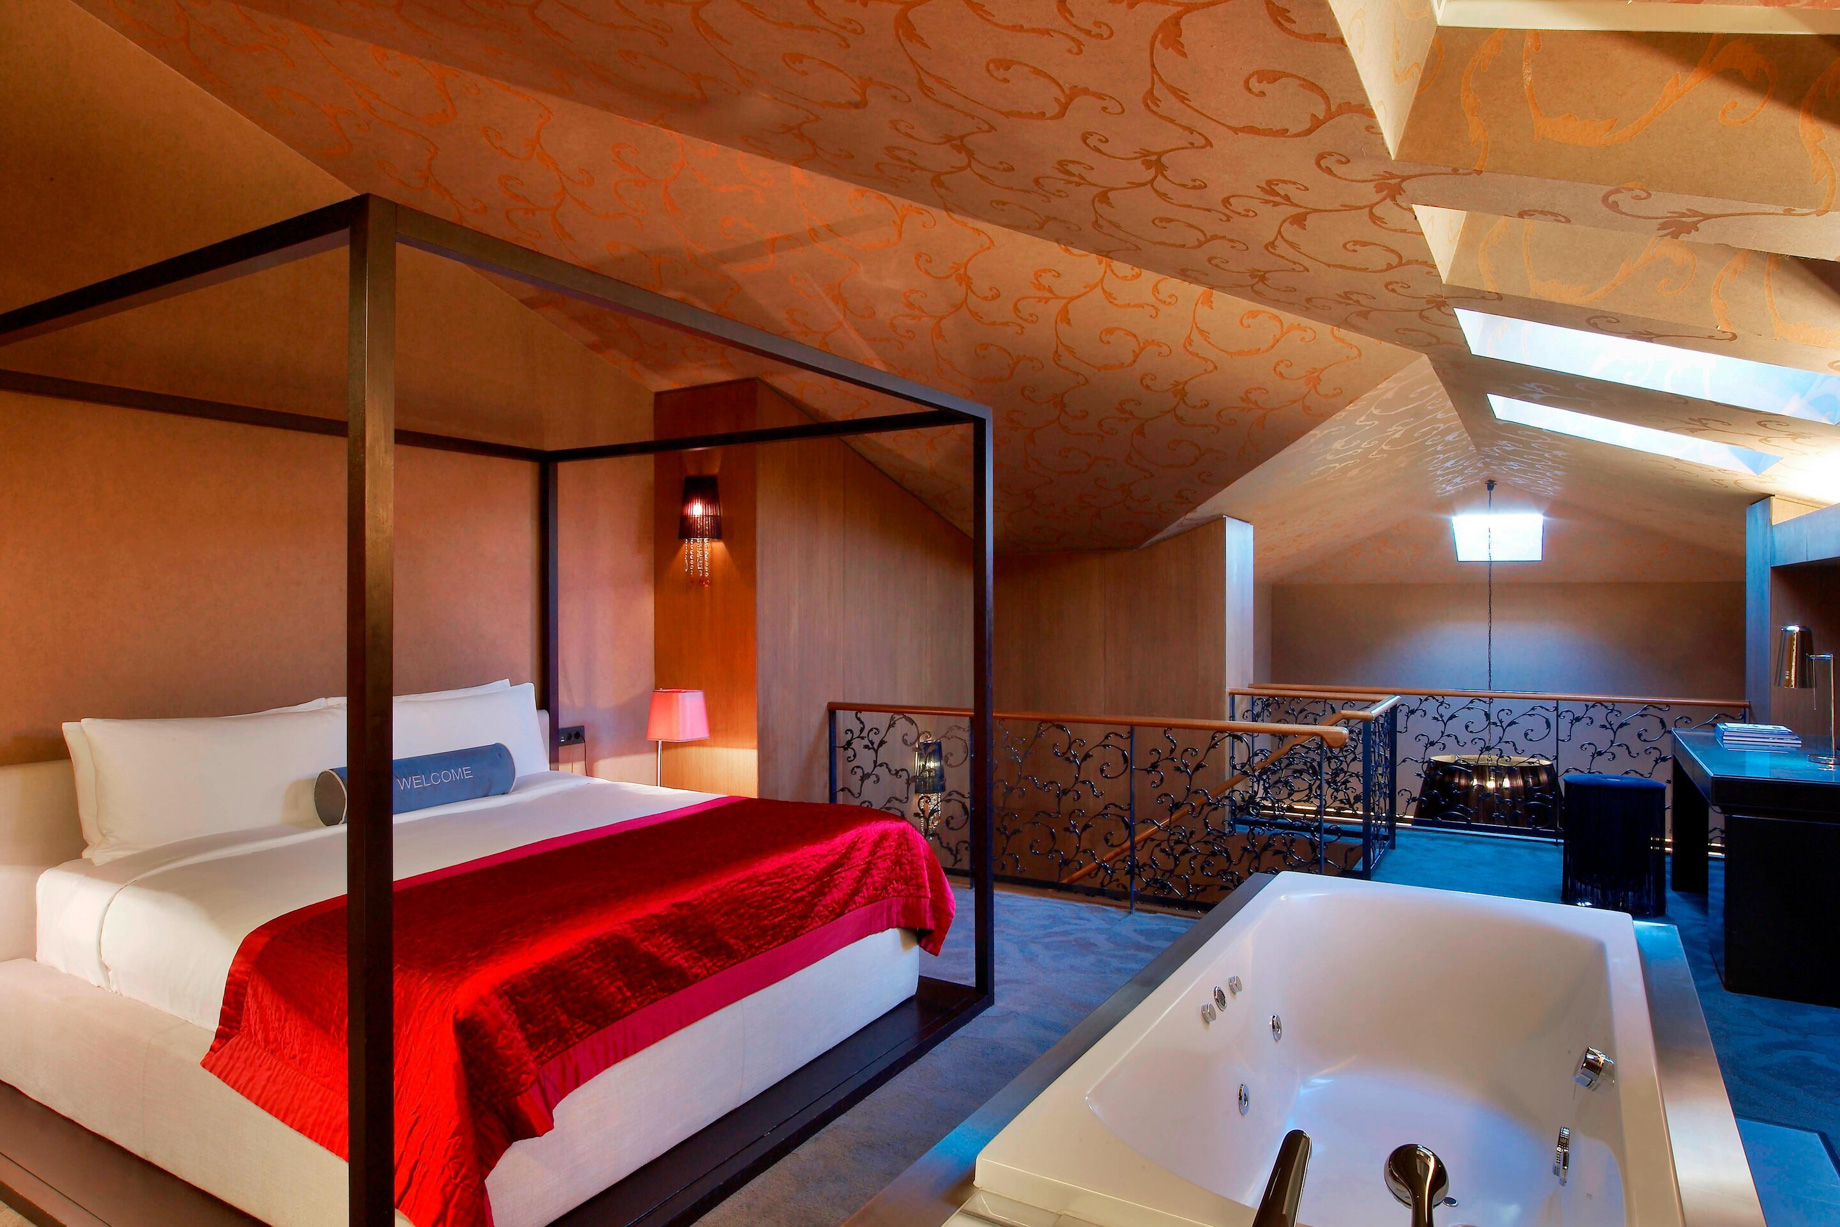 W Istanbul Hotel – Istanbul, Turkey – Wow Suite Bedroom Decor